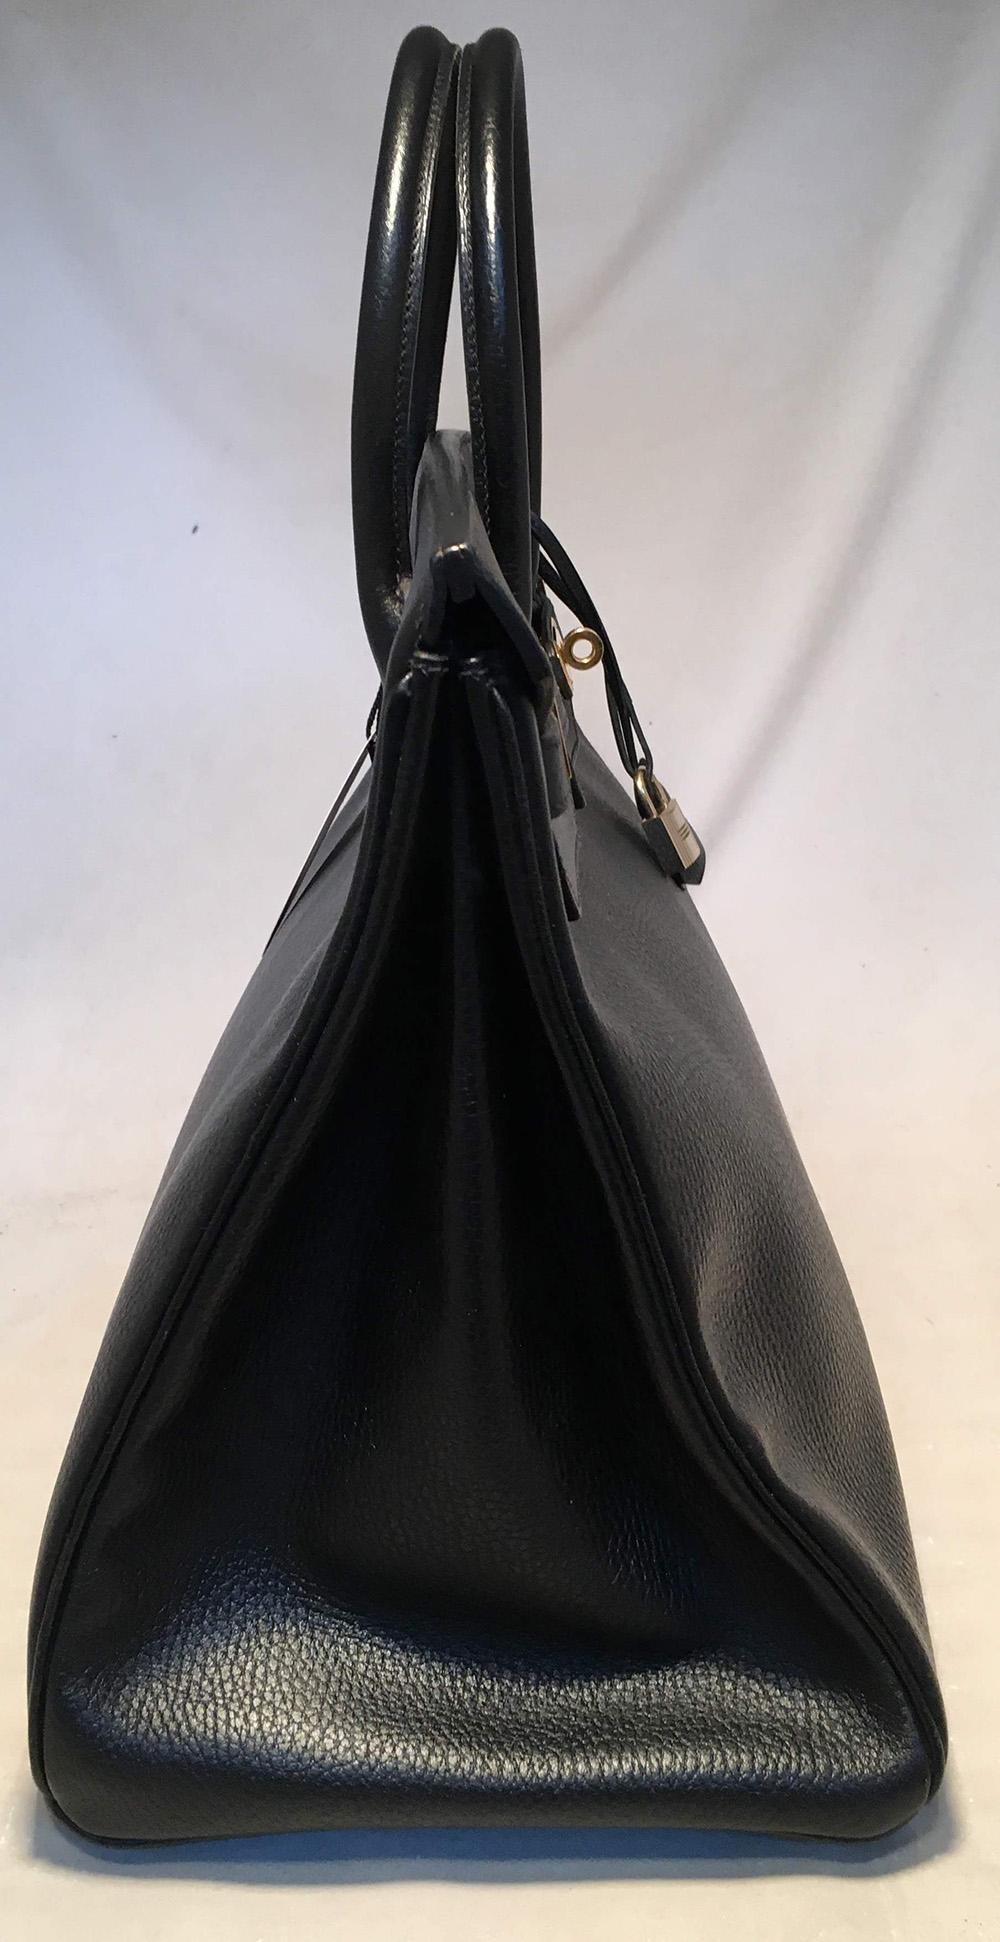 Hermes Black Togo Leather 40cm Birkin Bag GHW (Schwarz)